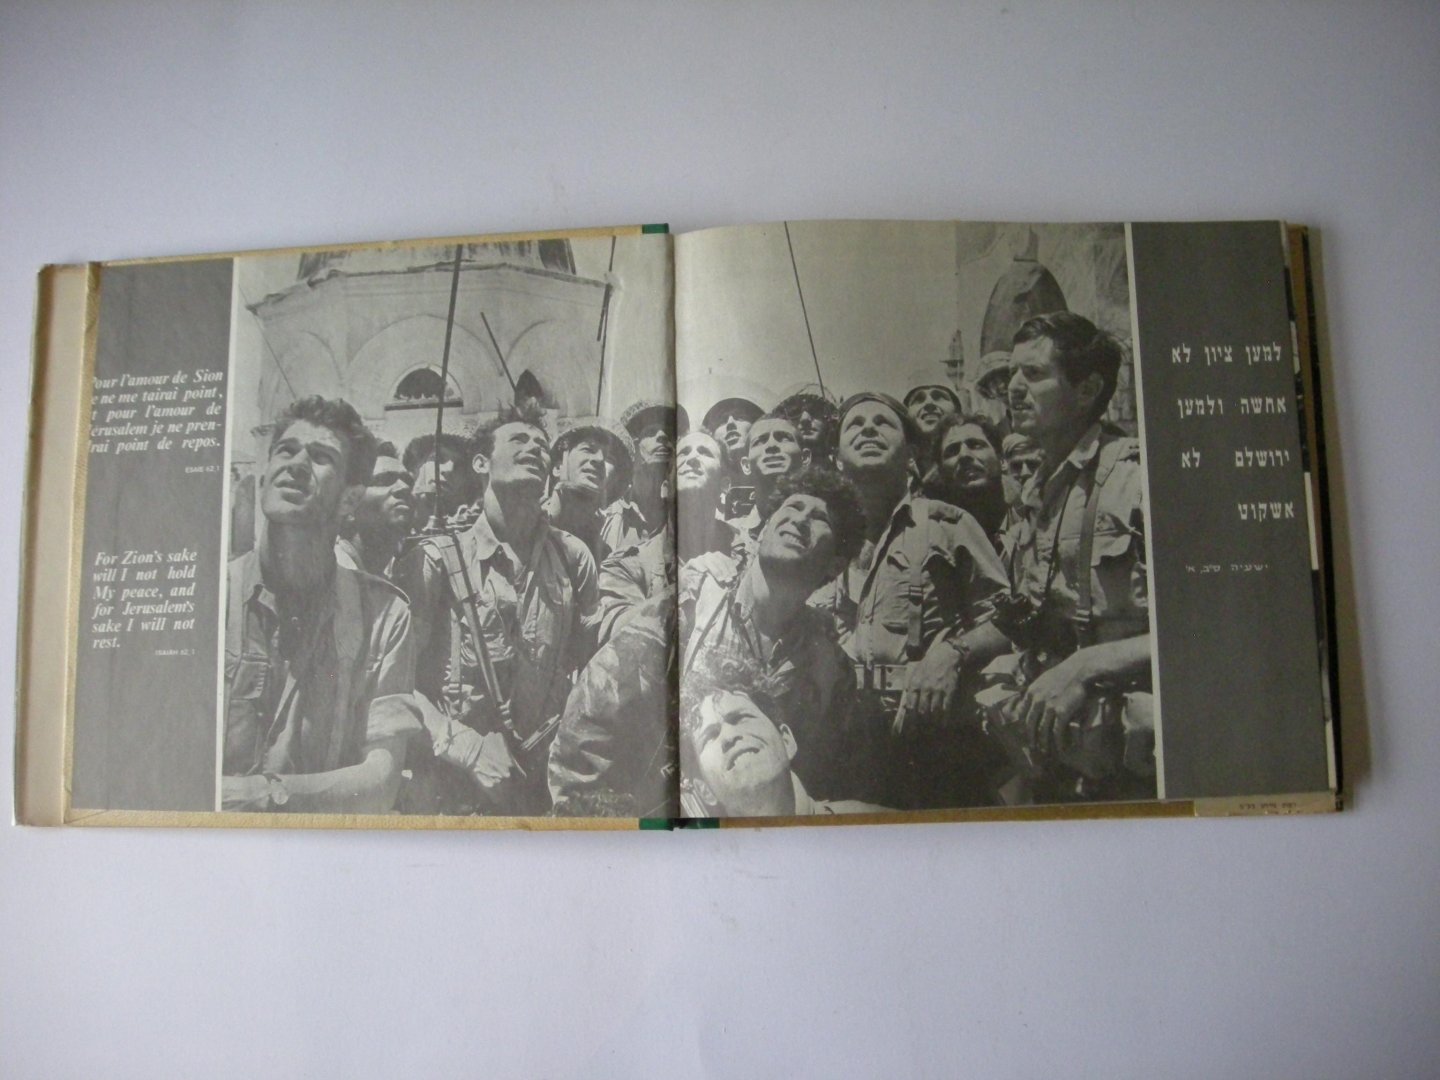 Arye Hasjavia - Album de la guerre israelo - arabe 1967  Album of the Israeli - Arab War.  L'Histoire d'une guerre / The Story of a War